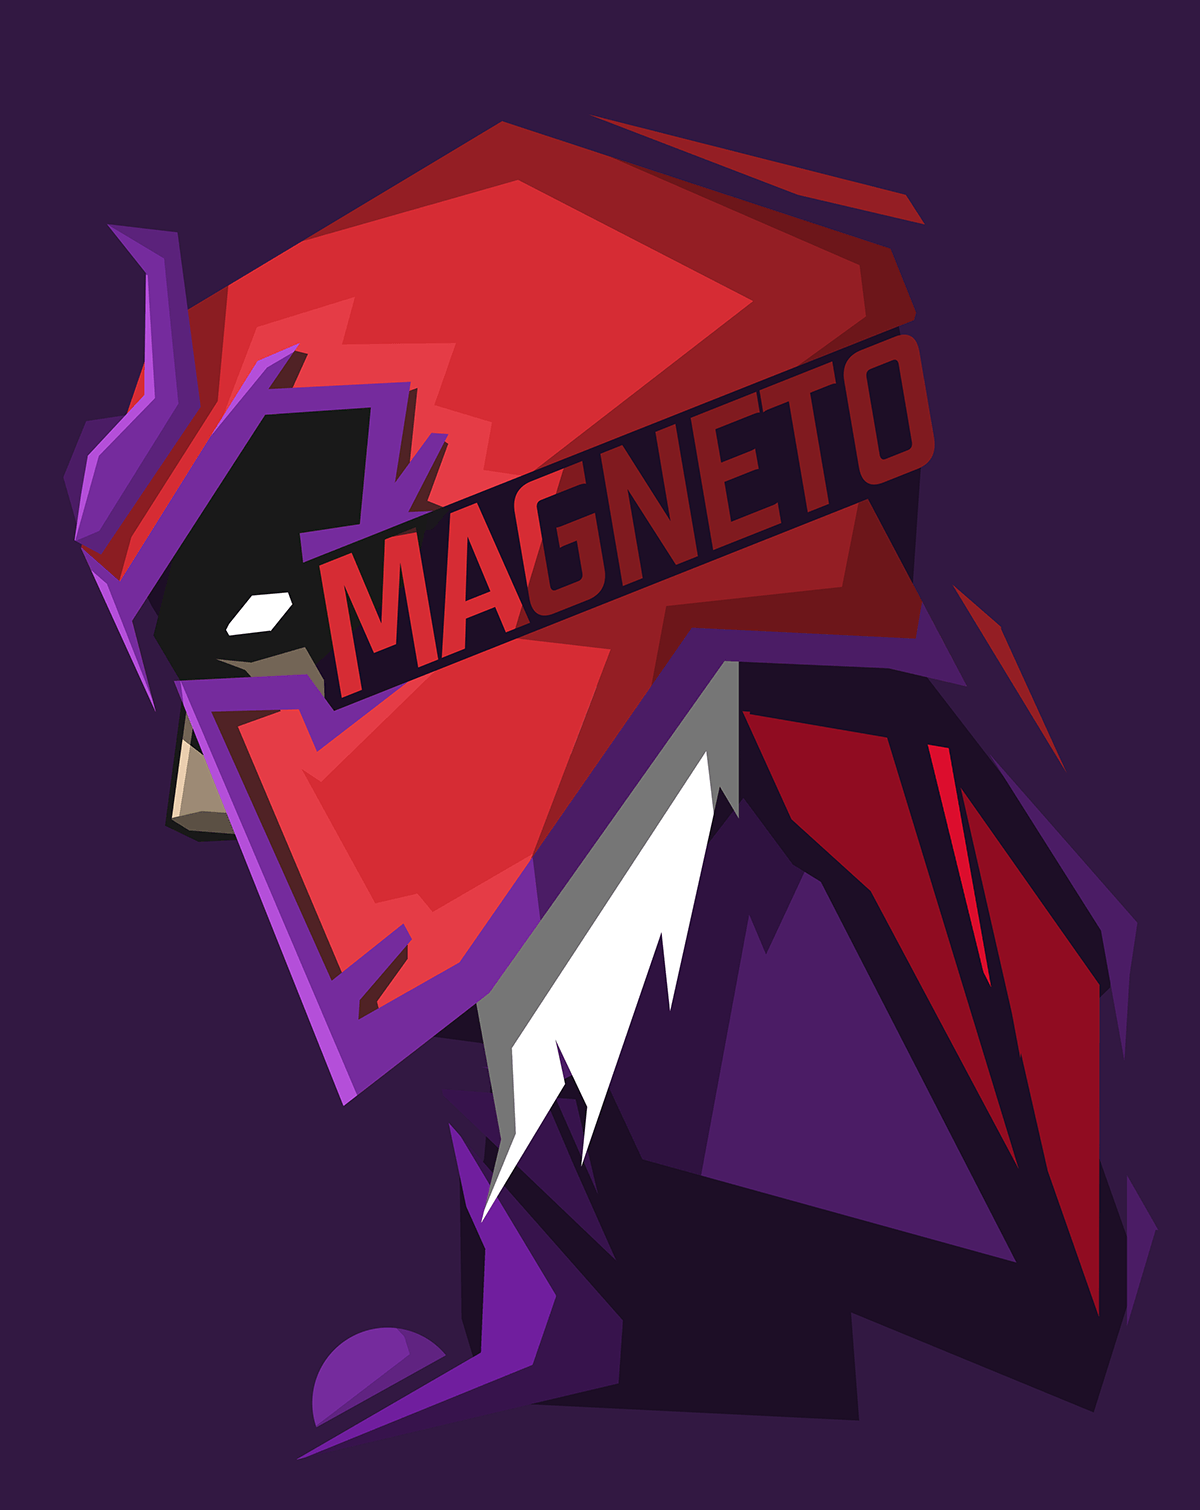 Magneto Logo - Wallpaper : illustration, purple background, text, logo, cartoon ...